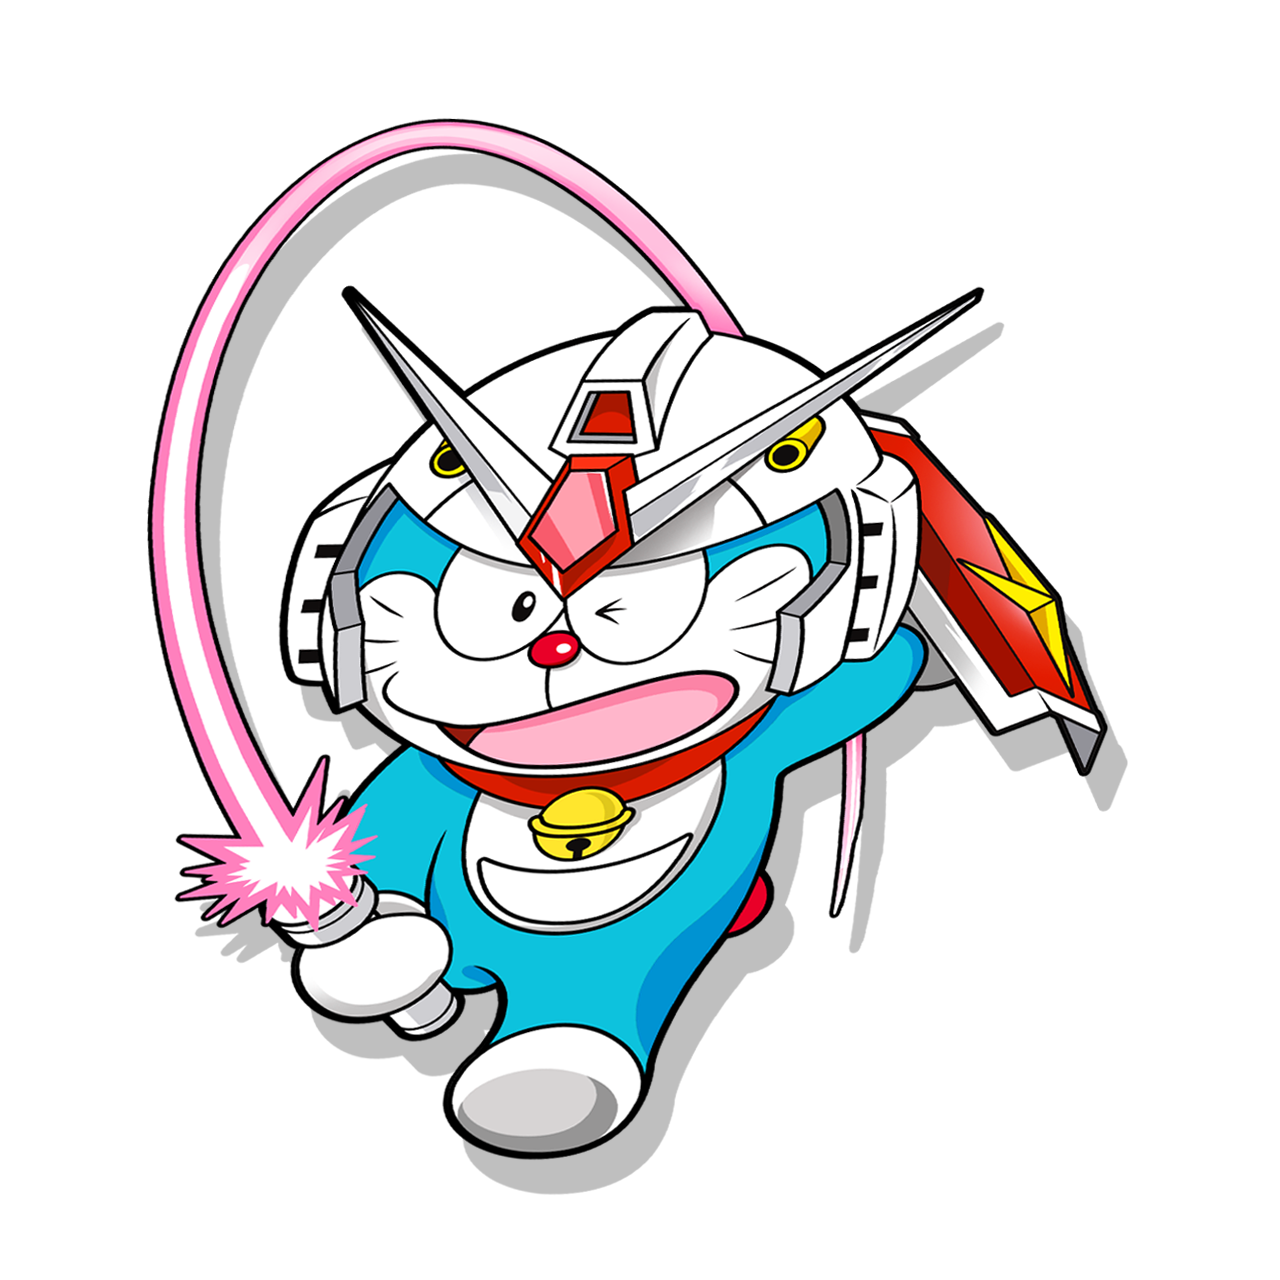  Gambar  Animasi Doraemon  Racing  DoraemonGram